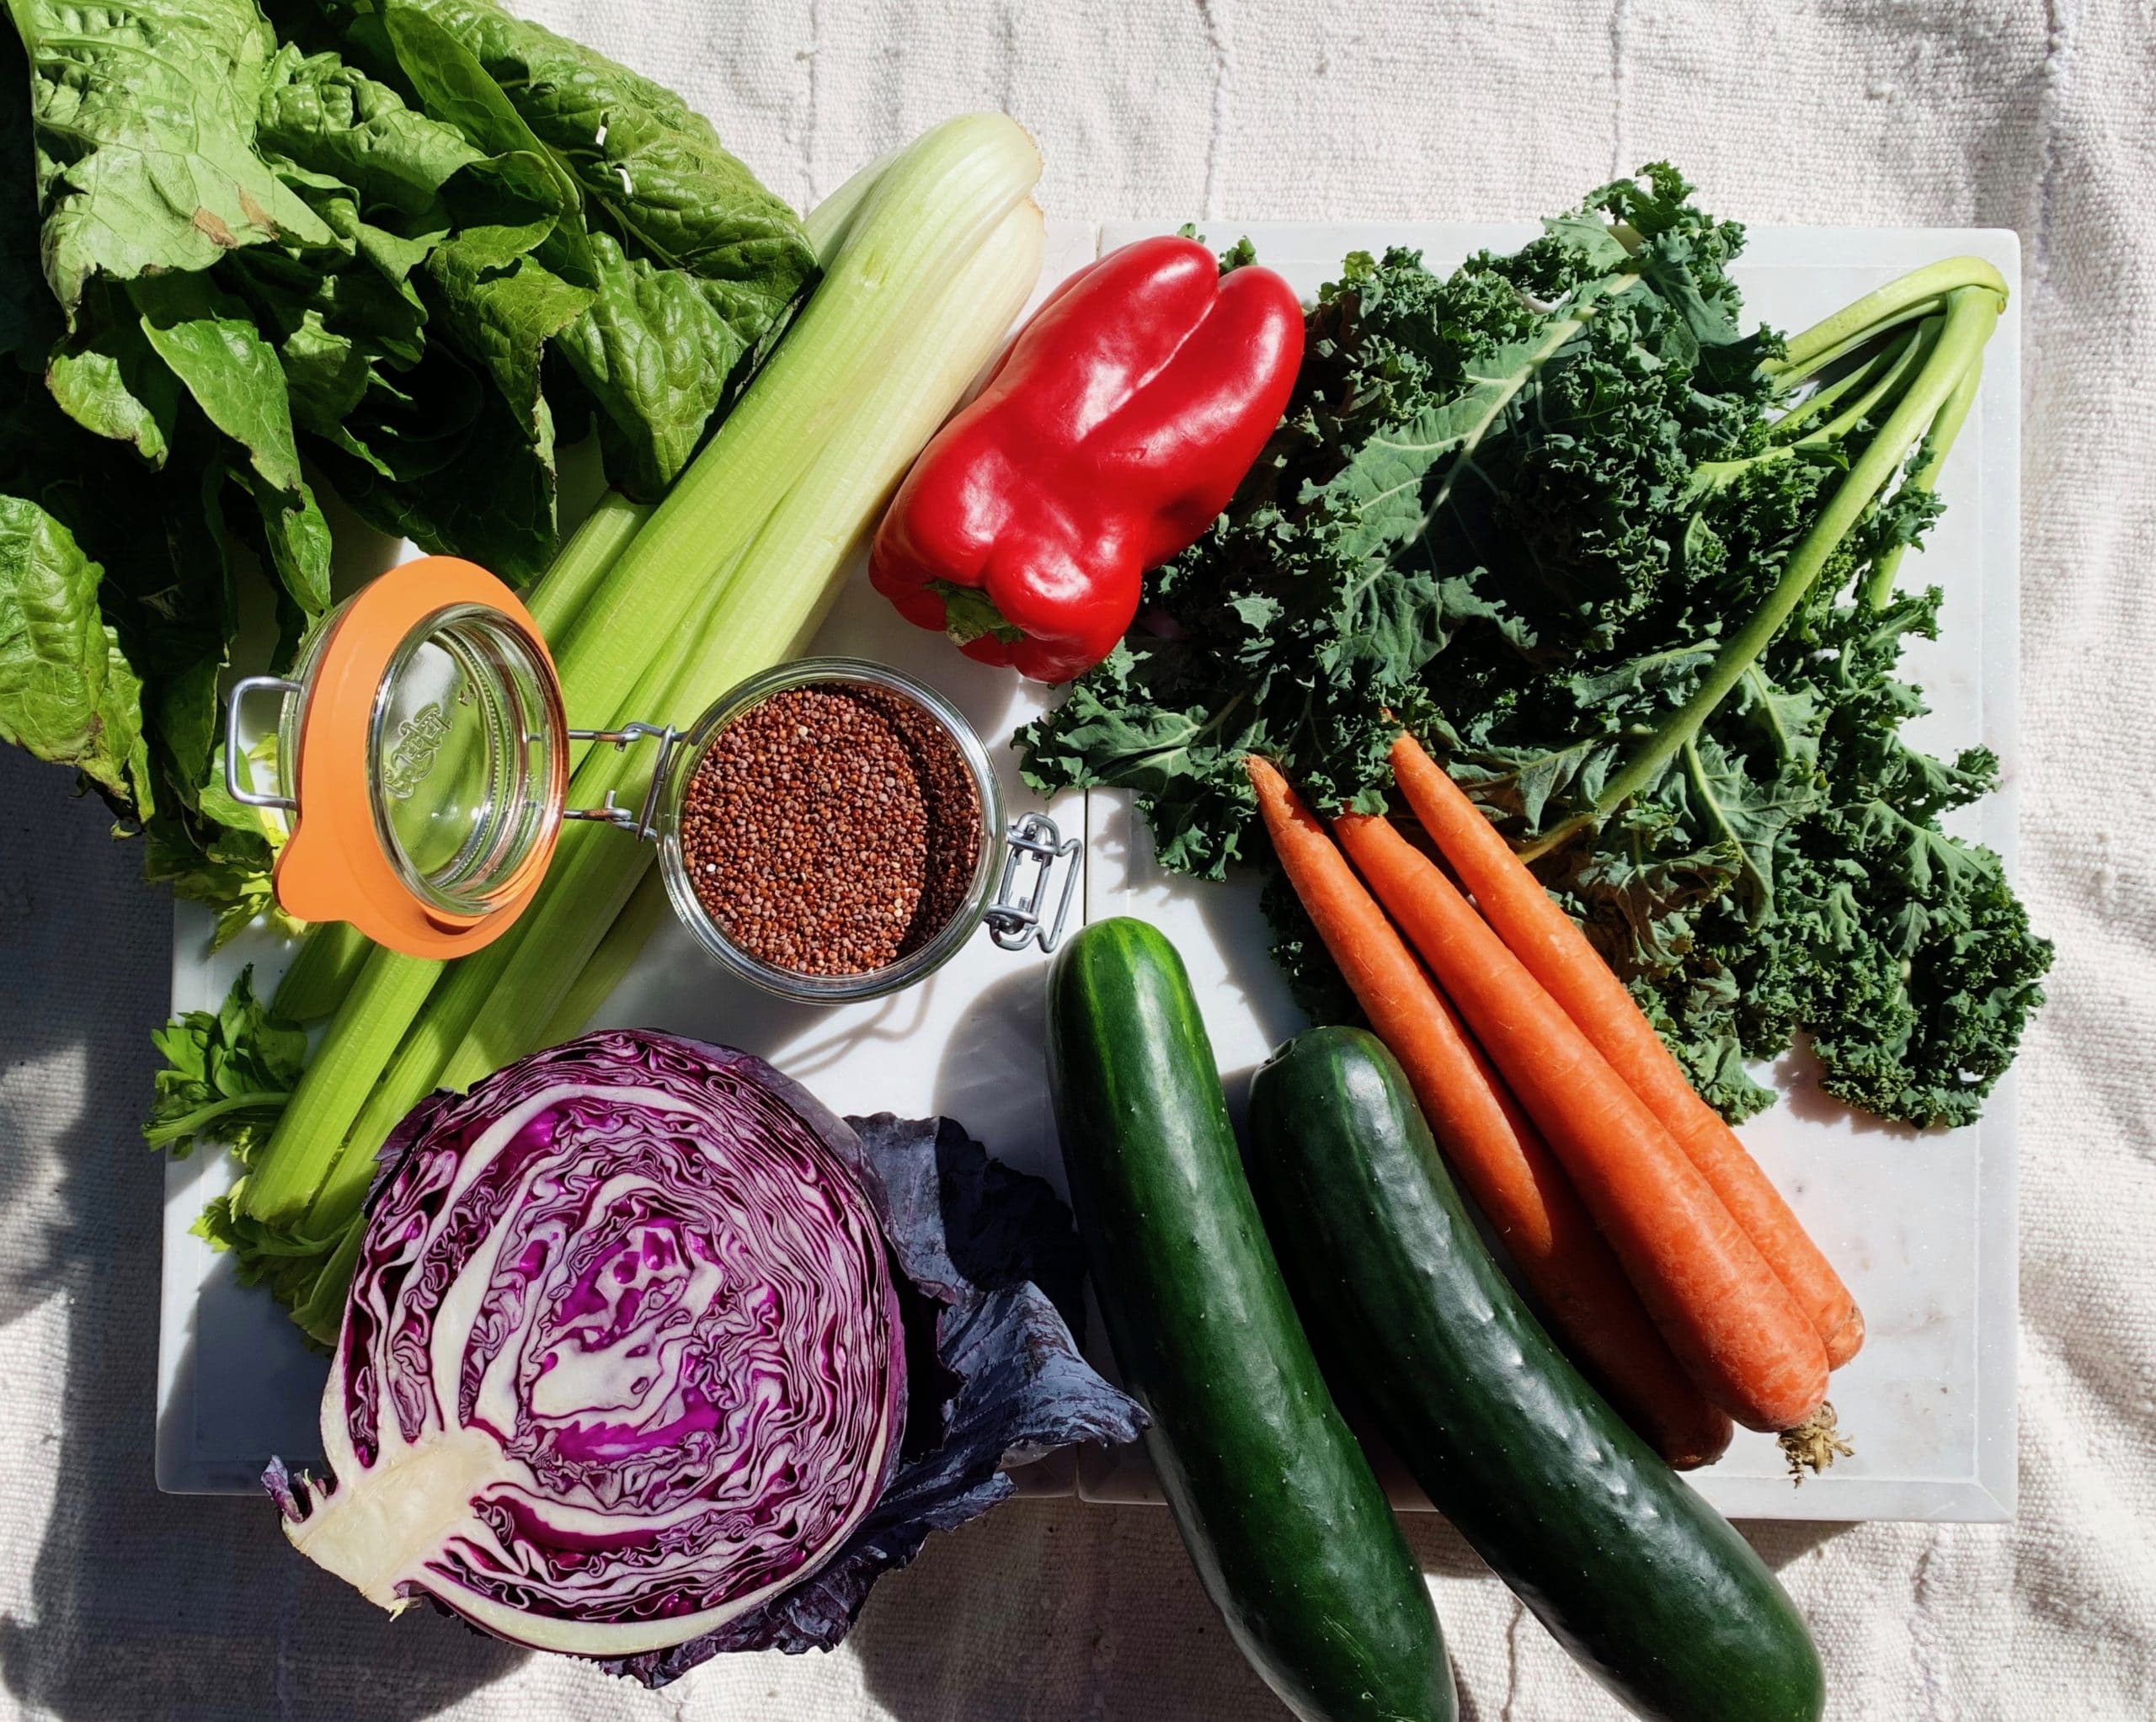 variety of fresh veggies including cucumbers, carrots, kale and raddichio